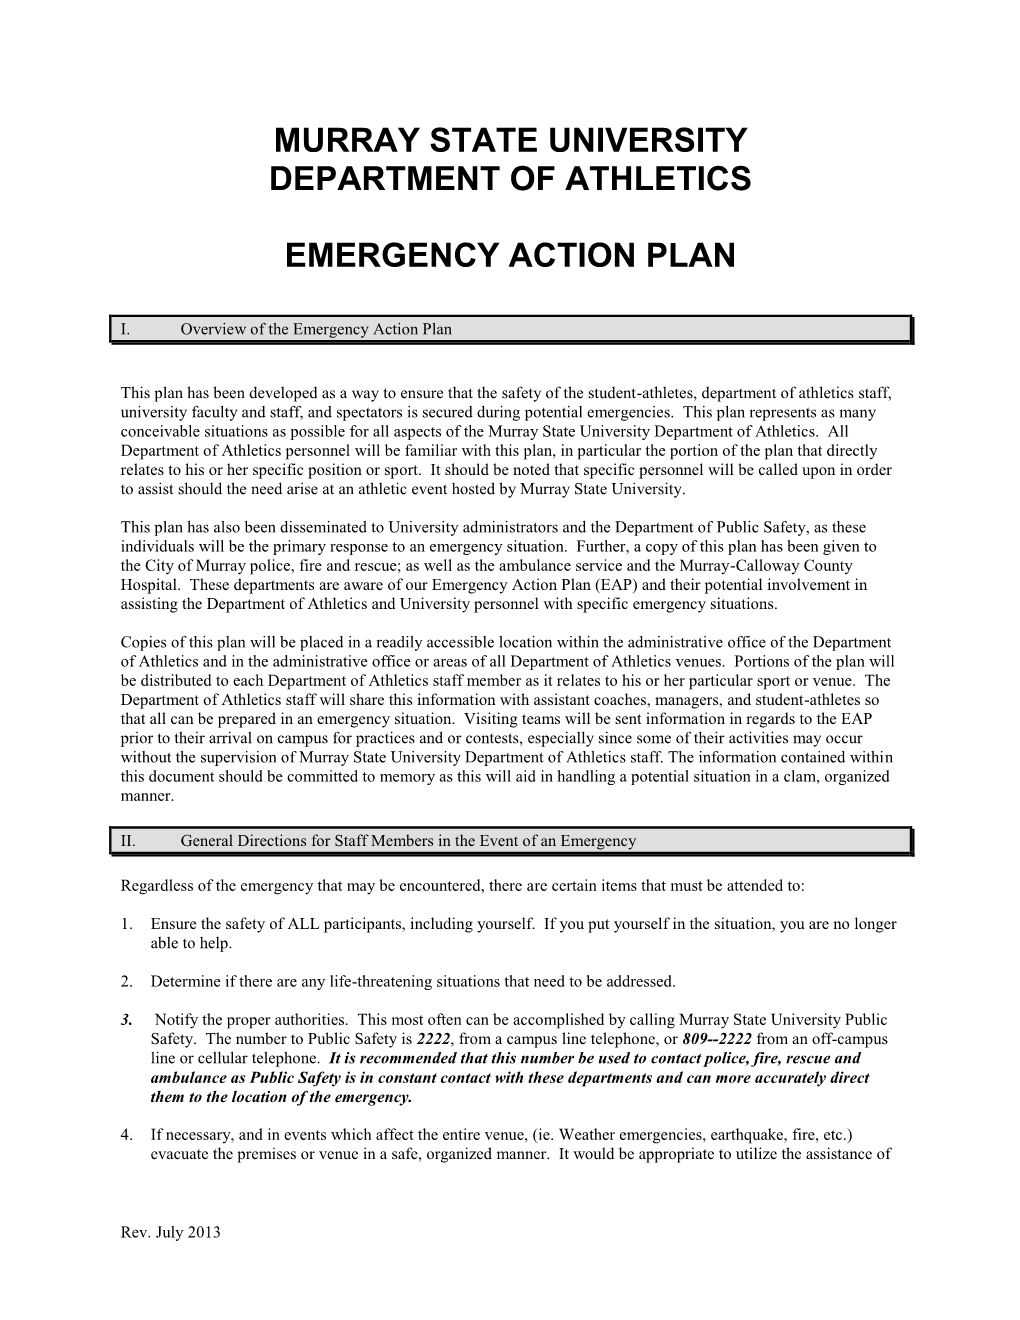 Murray State University Department of Athletics